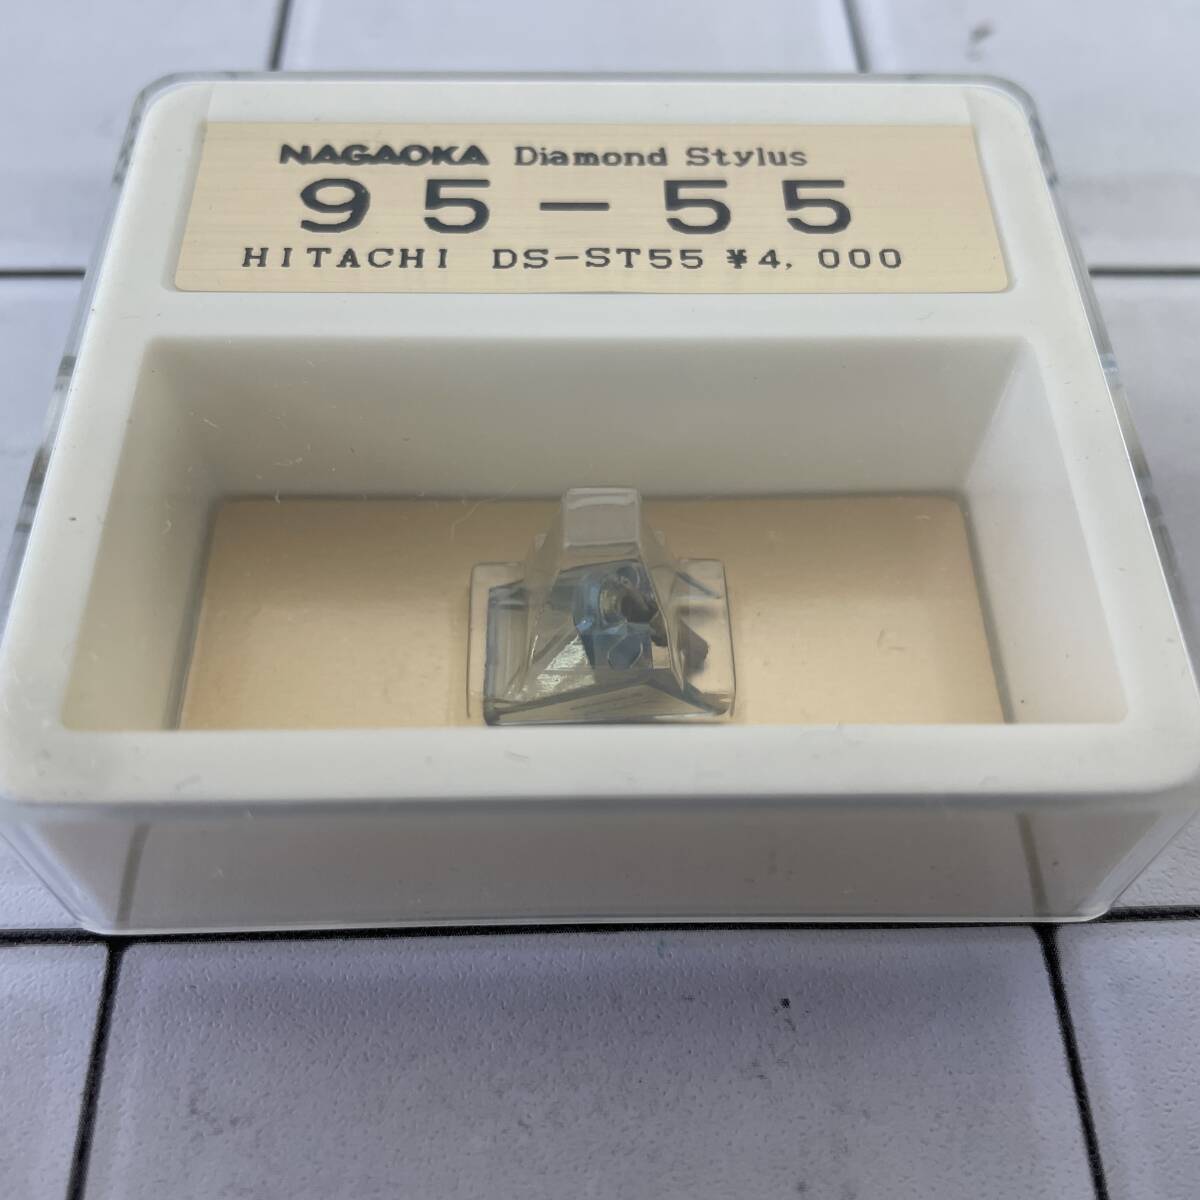 E027-M25-43 ◎ NAGAOKA ナガオカ Diamond Stylus 95-55 HITACHI DS-ST55 レコード針の画像8